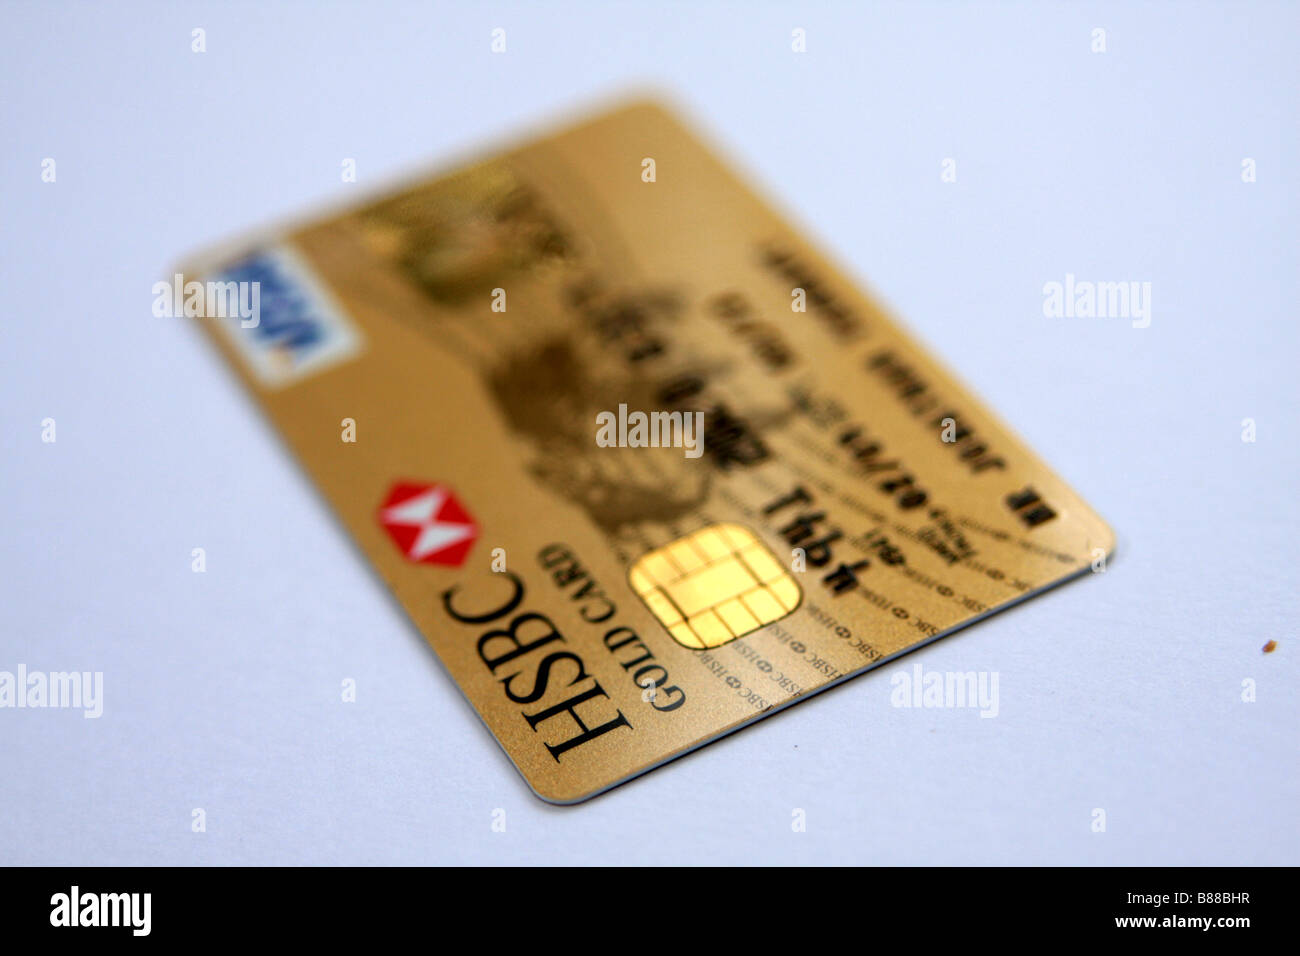 hsbc credit card